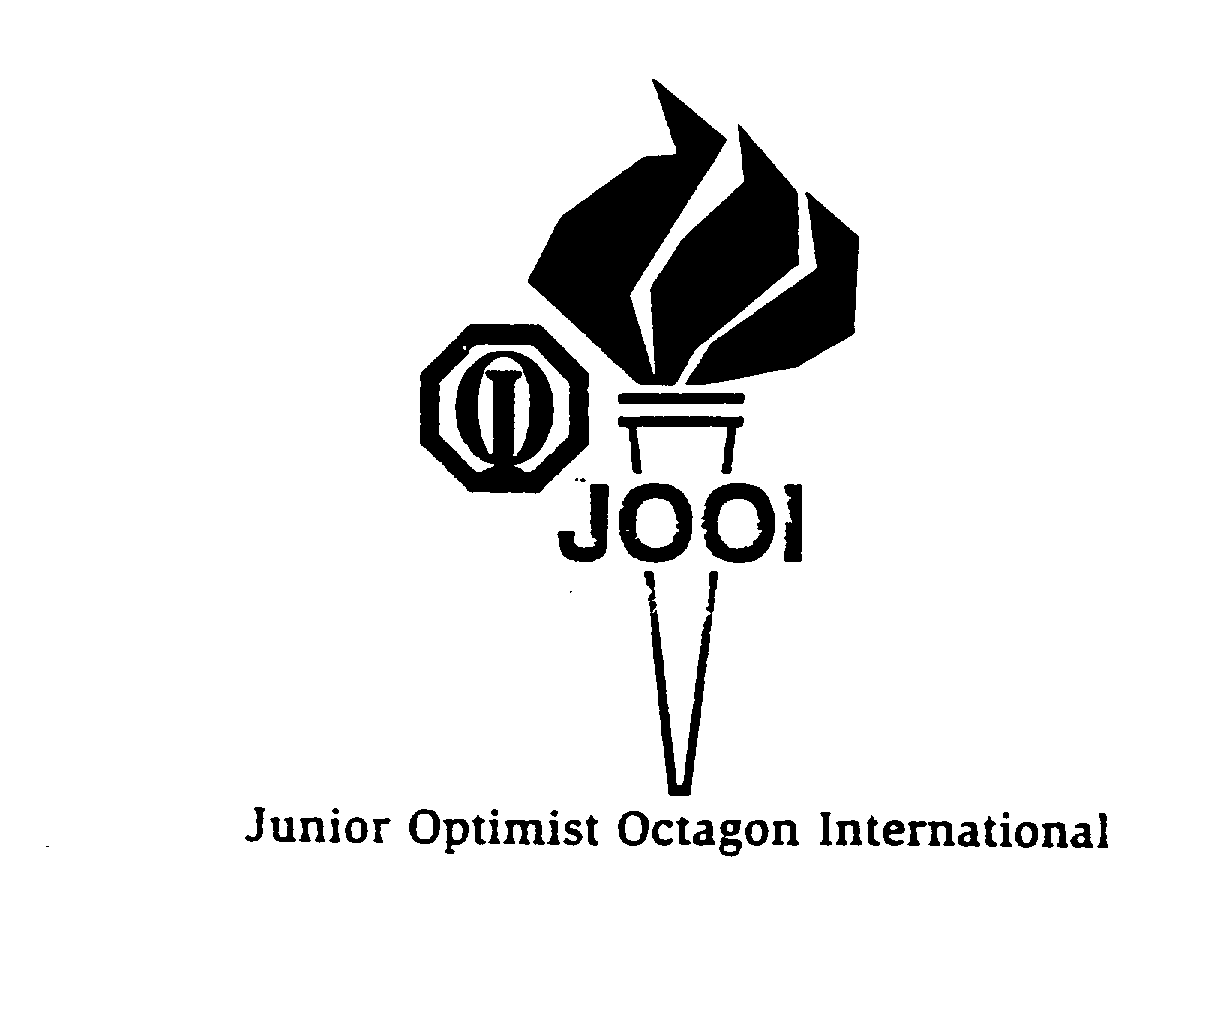  OI JOOI JUNIOR OPTIMIST OCTAGON INTERNATIONAL